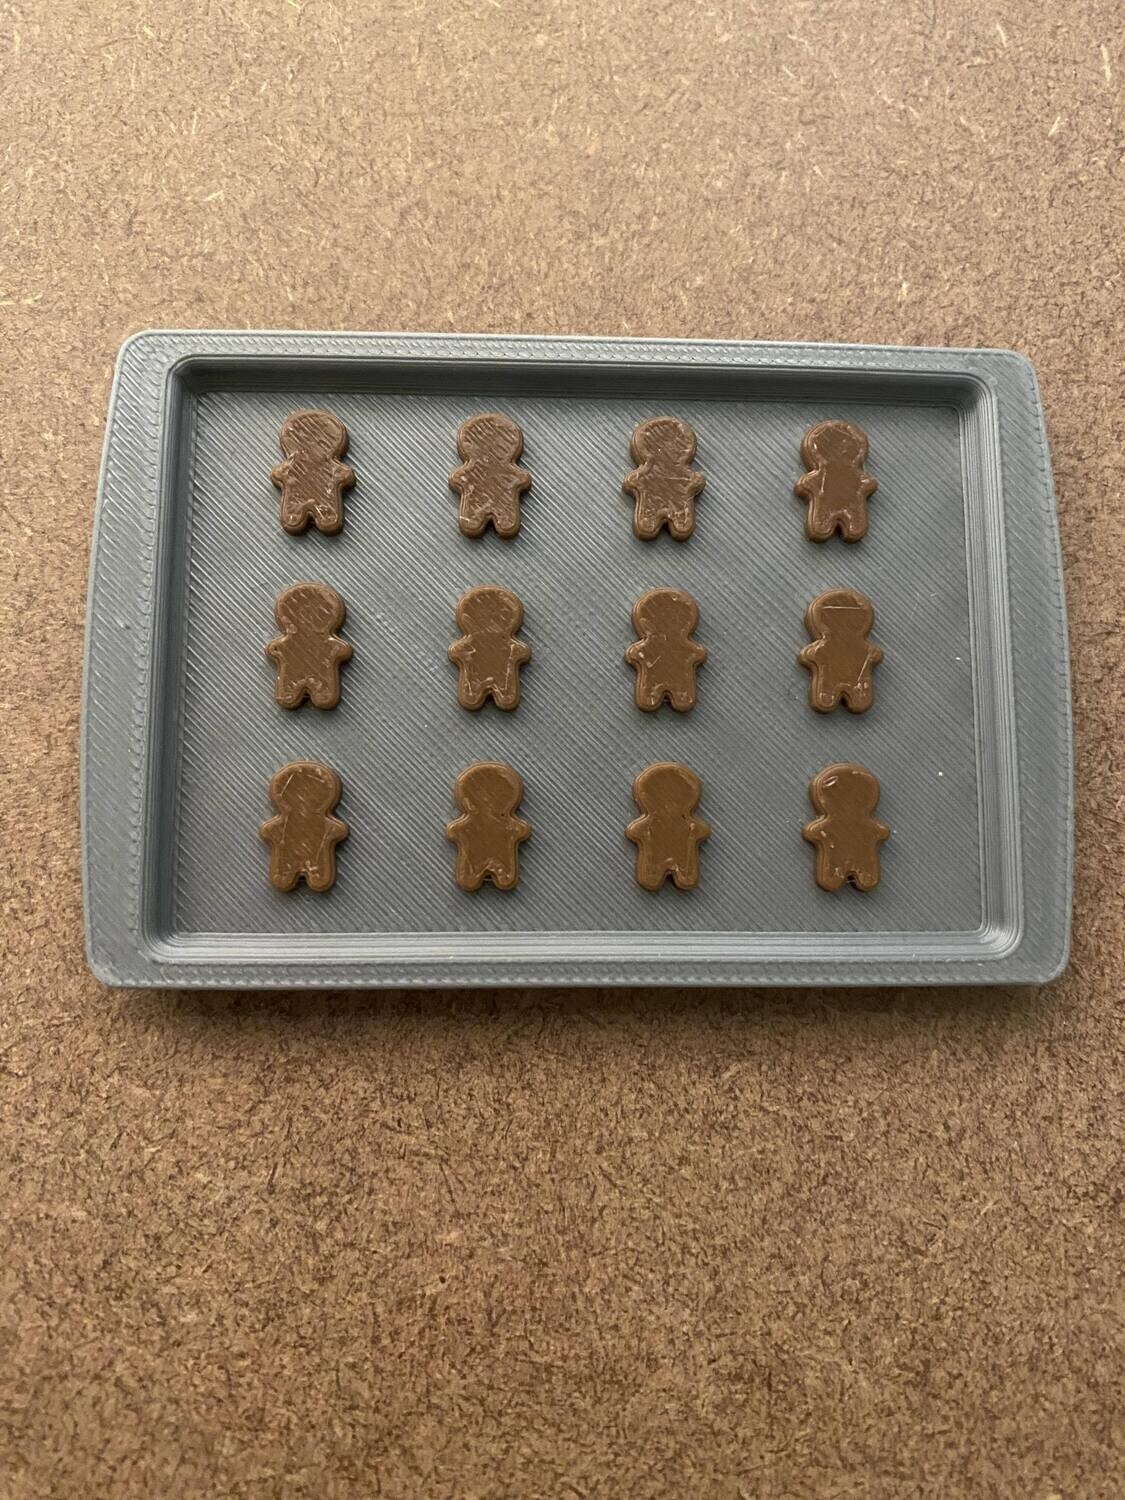 Elf Tray Mini Baking Sheet w/GB Cookies